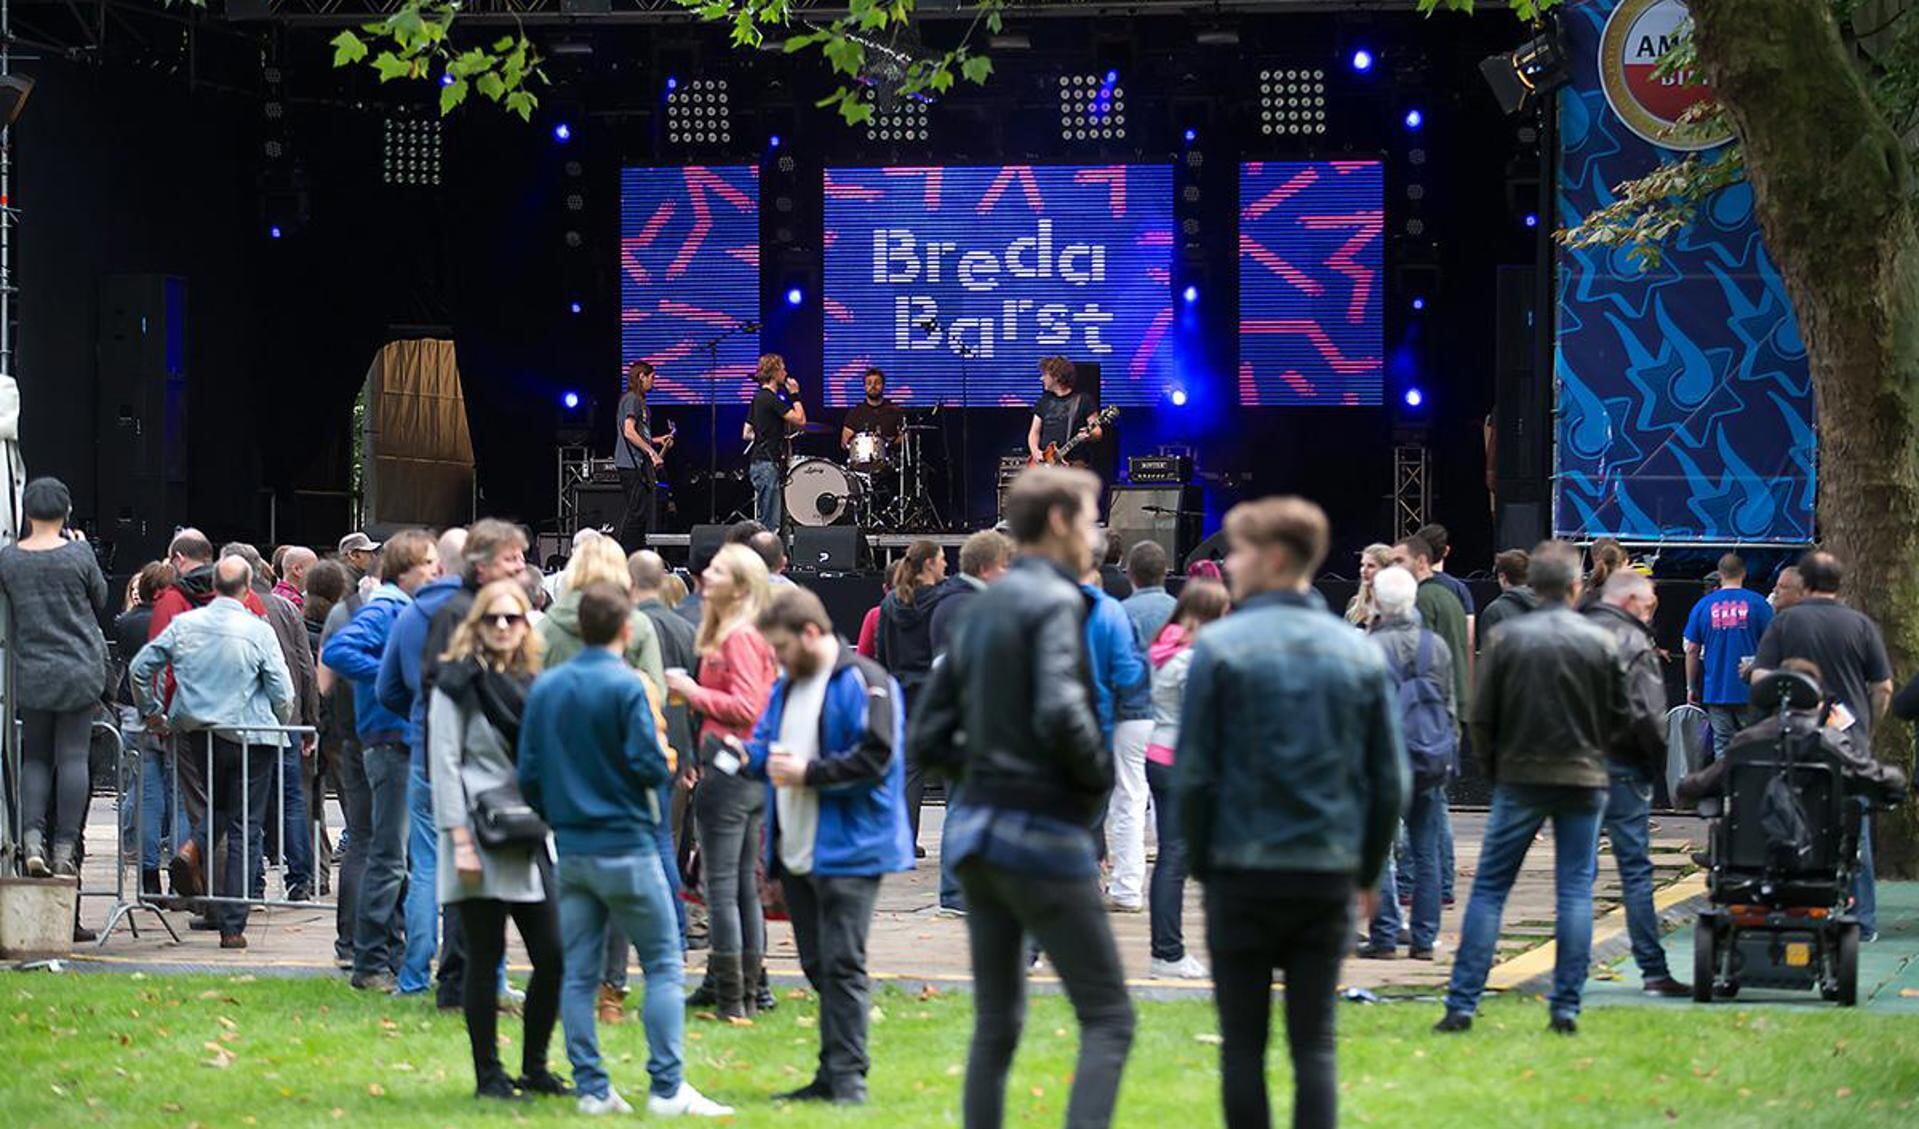 Breda Barst 2015 